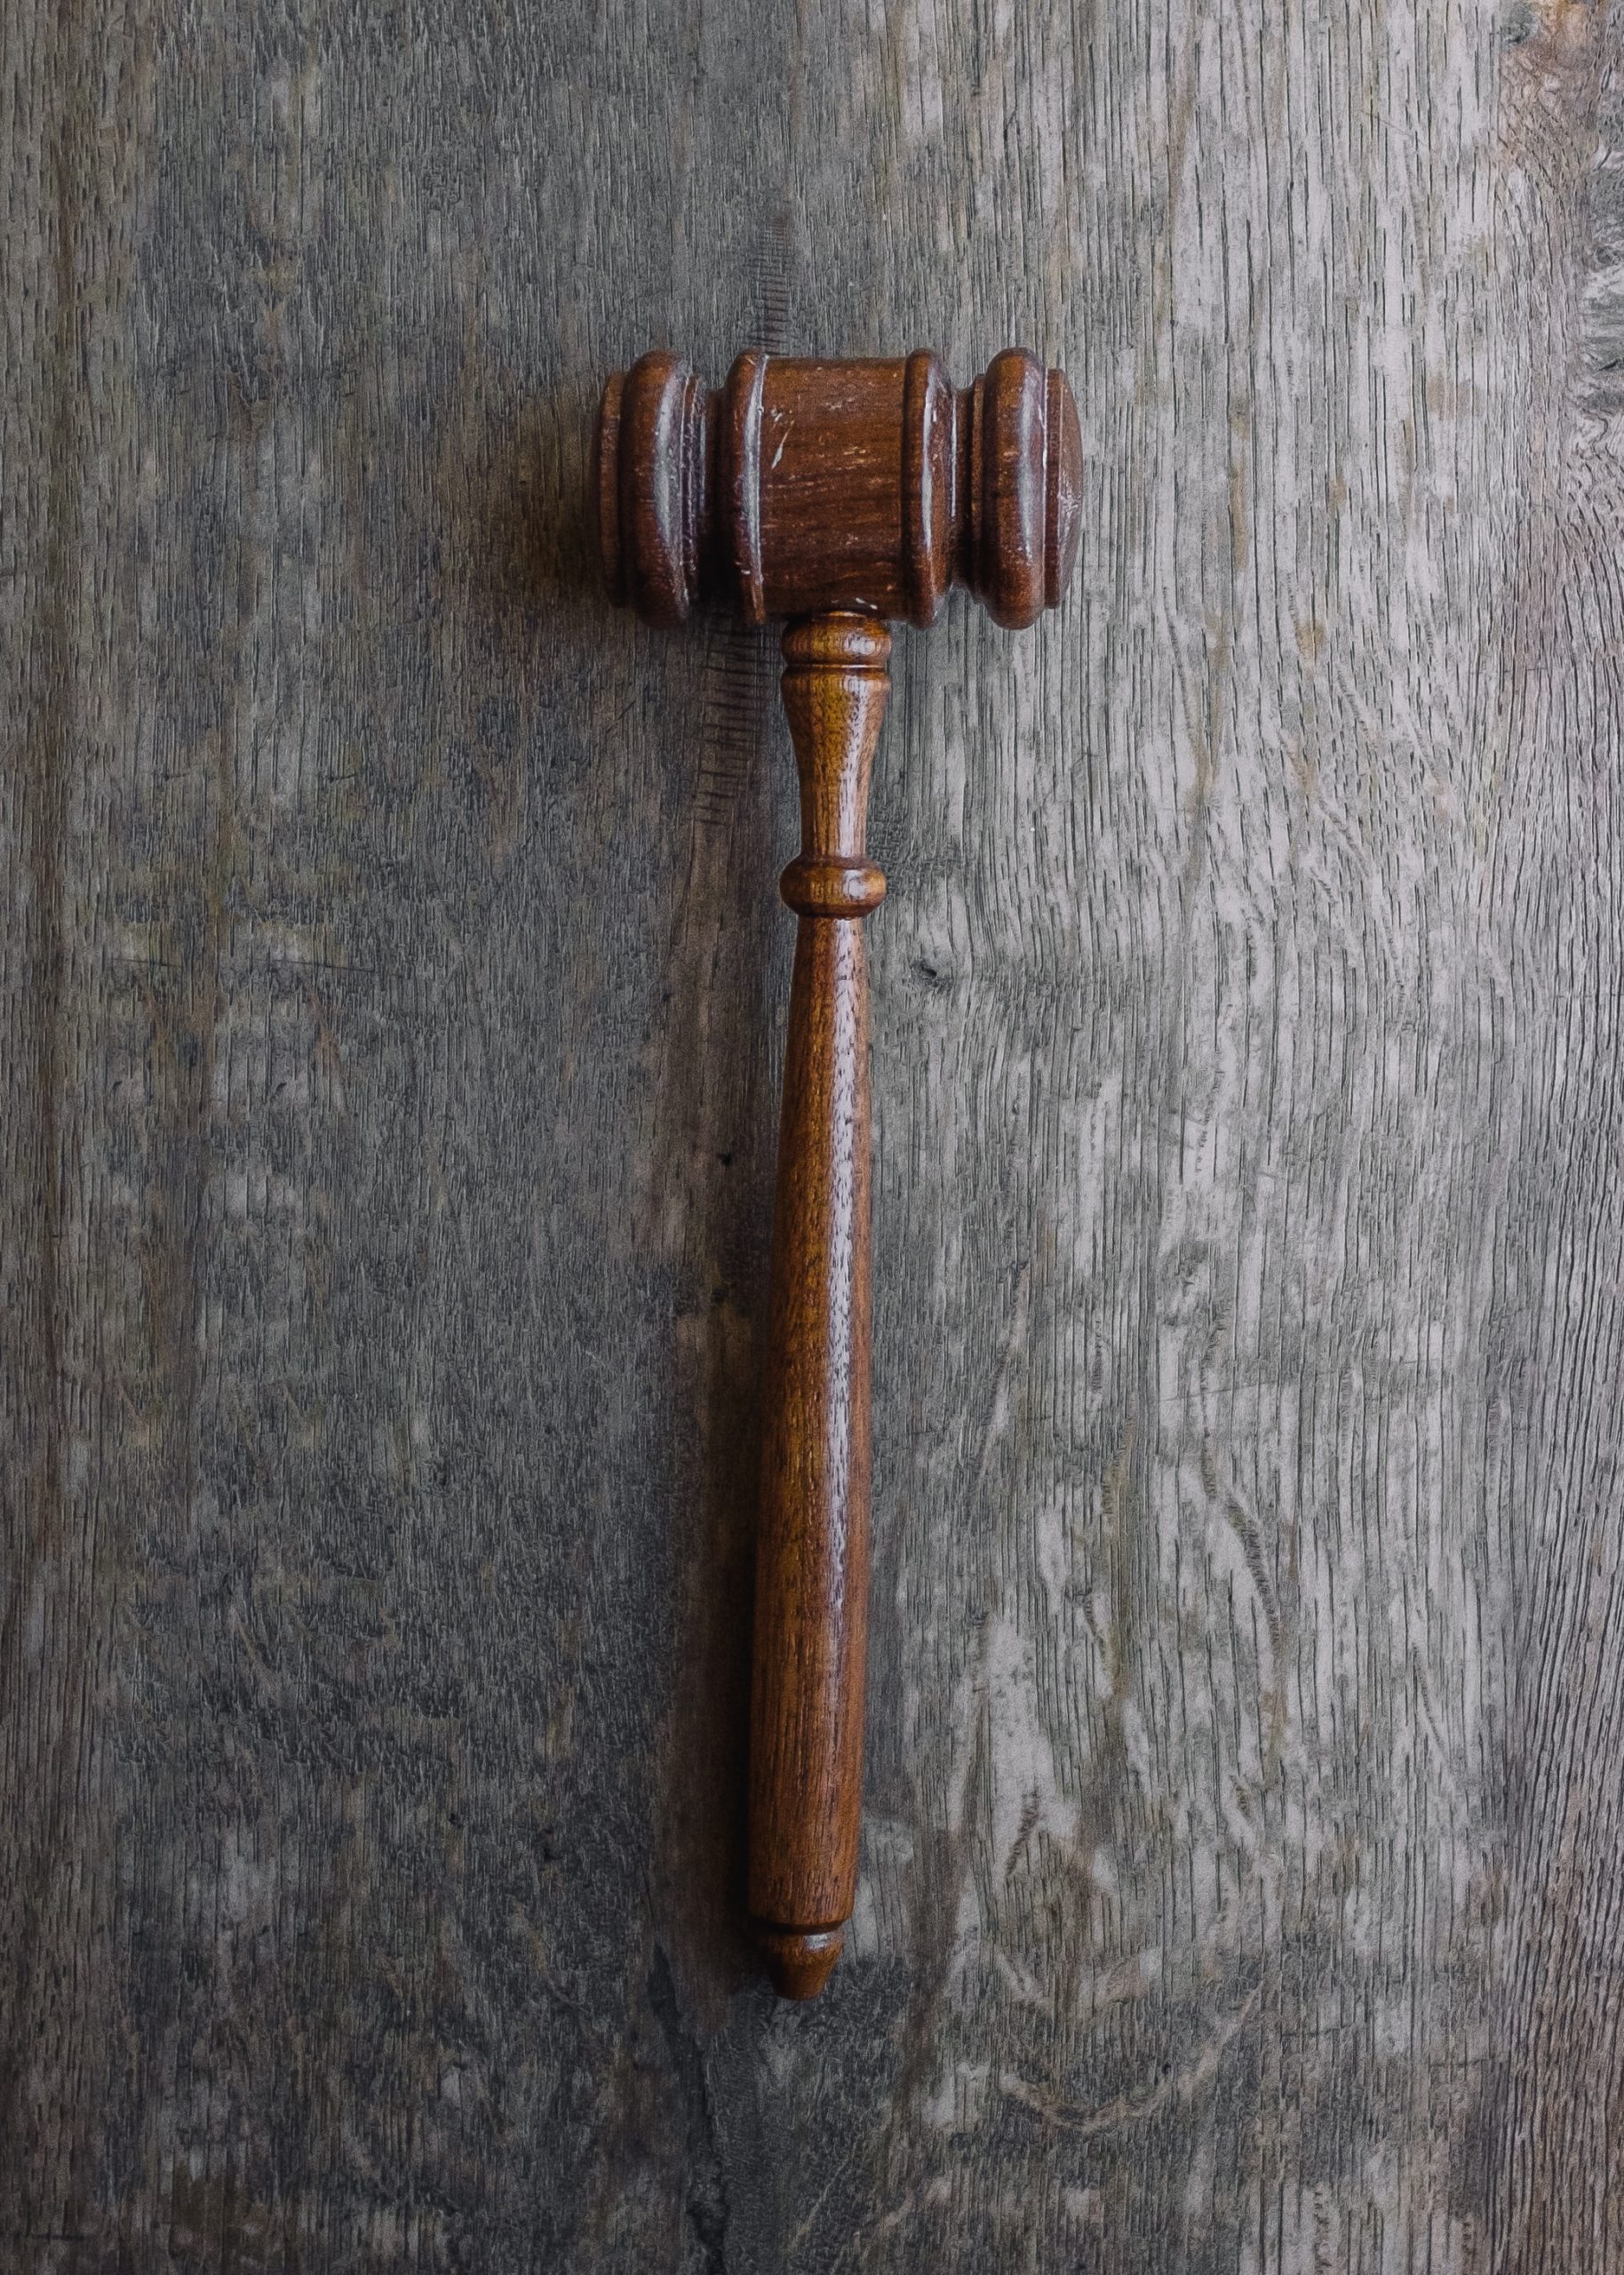 Bitcoin trust, a judge's hammer